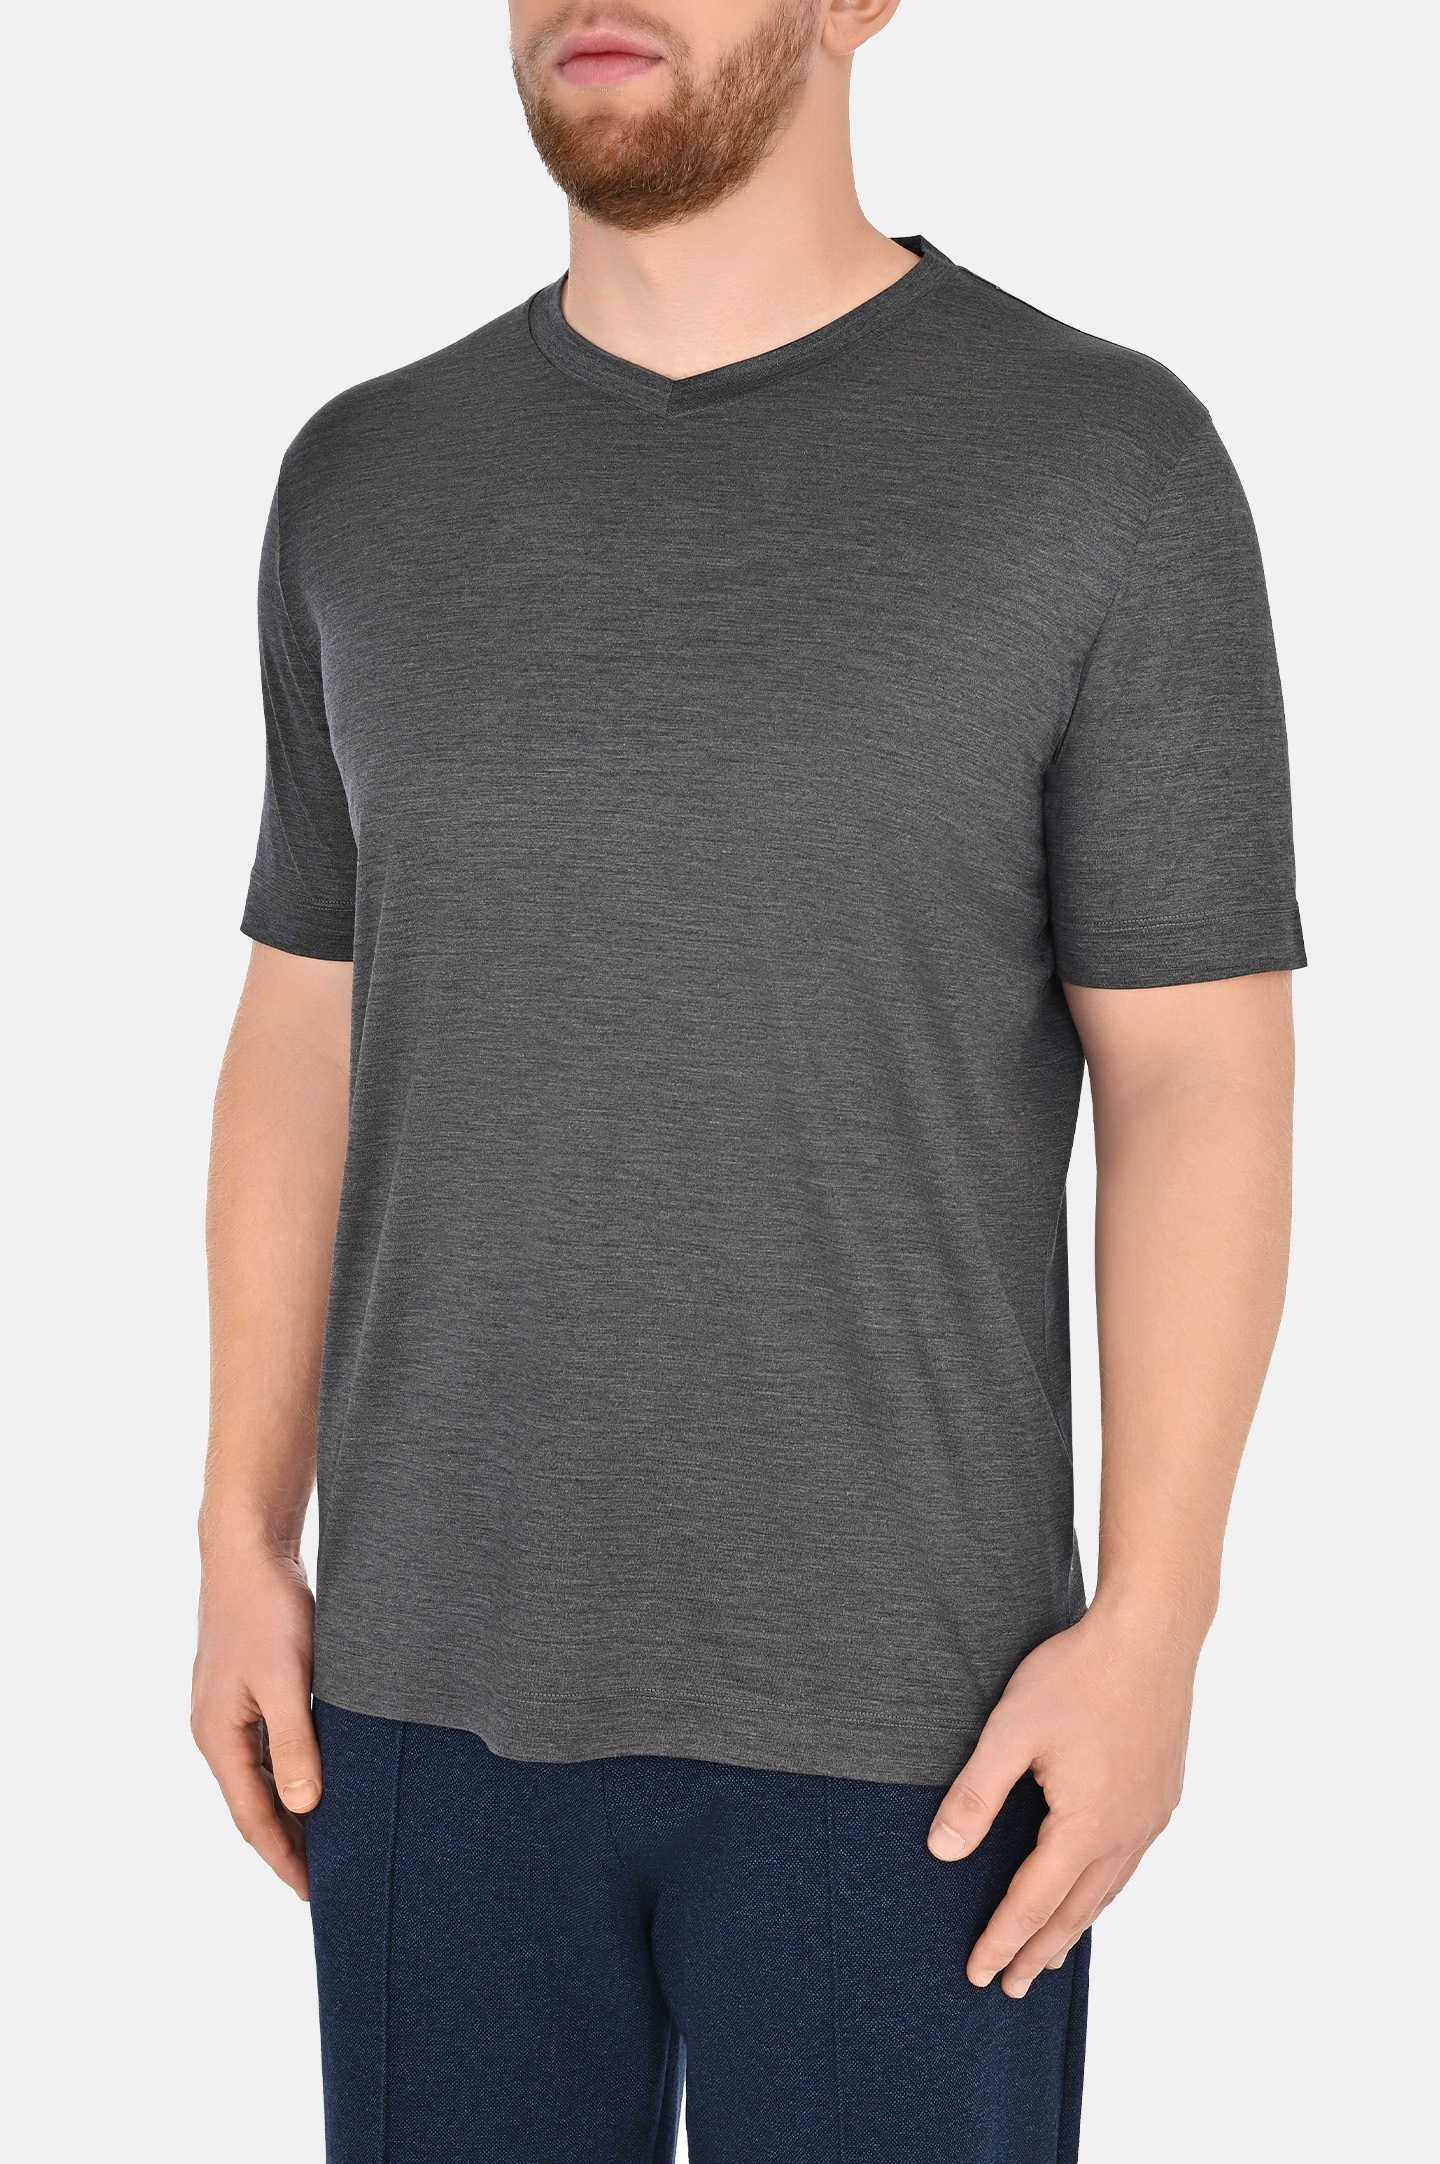 Шелковая футболка CANALI MX01184 T0810, цвет: Темно-серый, Мужской